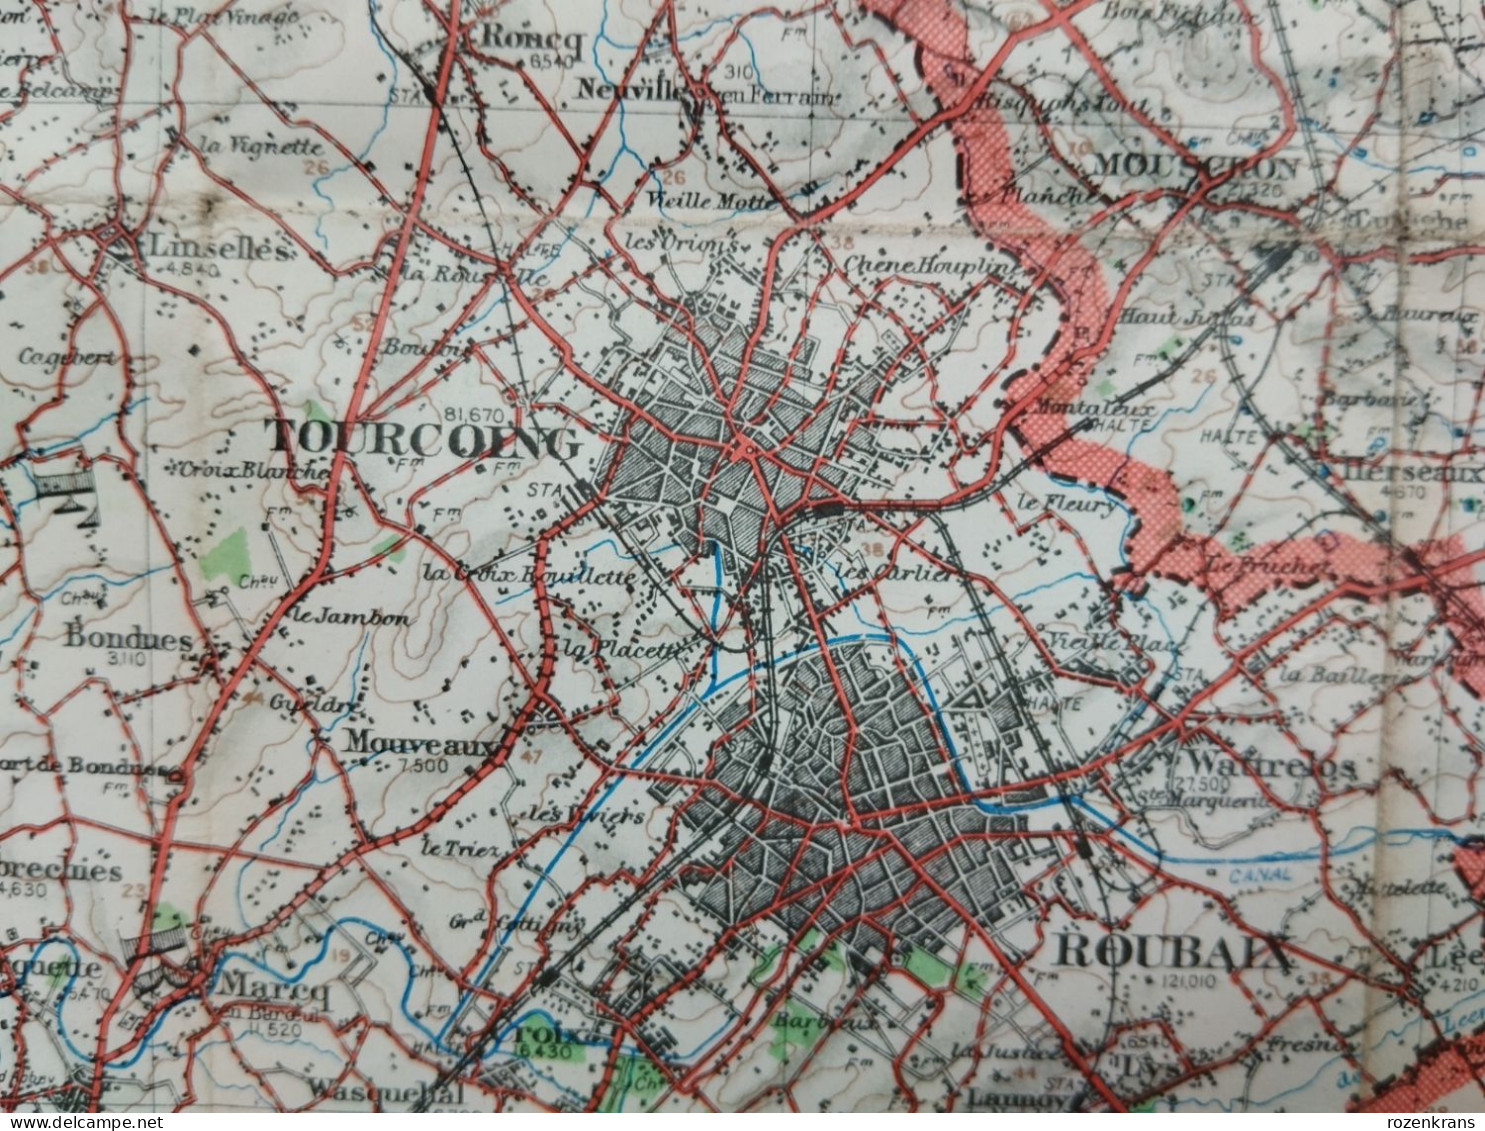 Carte Topographique Militaire UK War Office 1917 World War 1 WW1 Tournai Roubaix Lille Roeselare Kortrijk Deinze Tielt - Topographical Maps